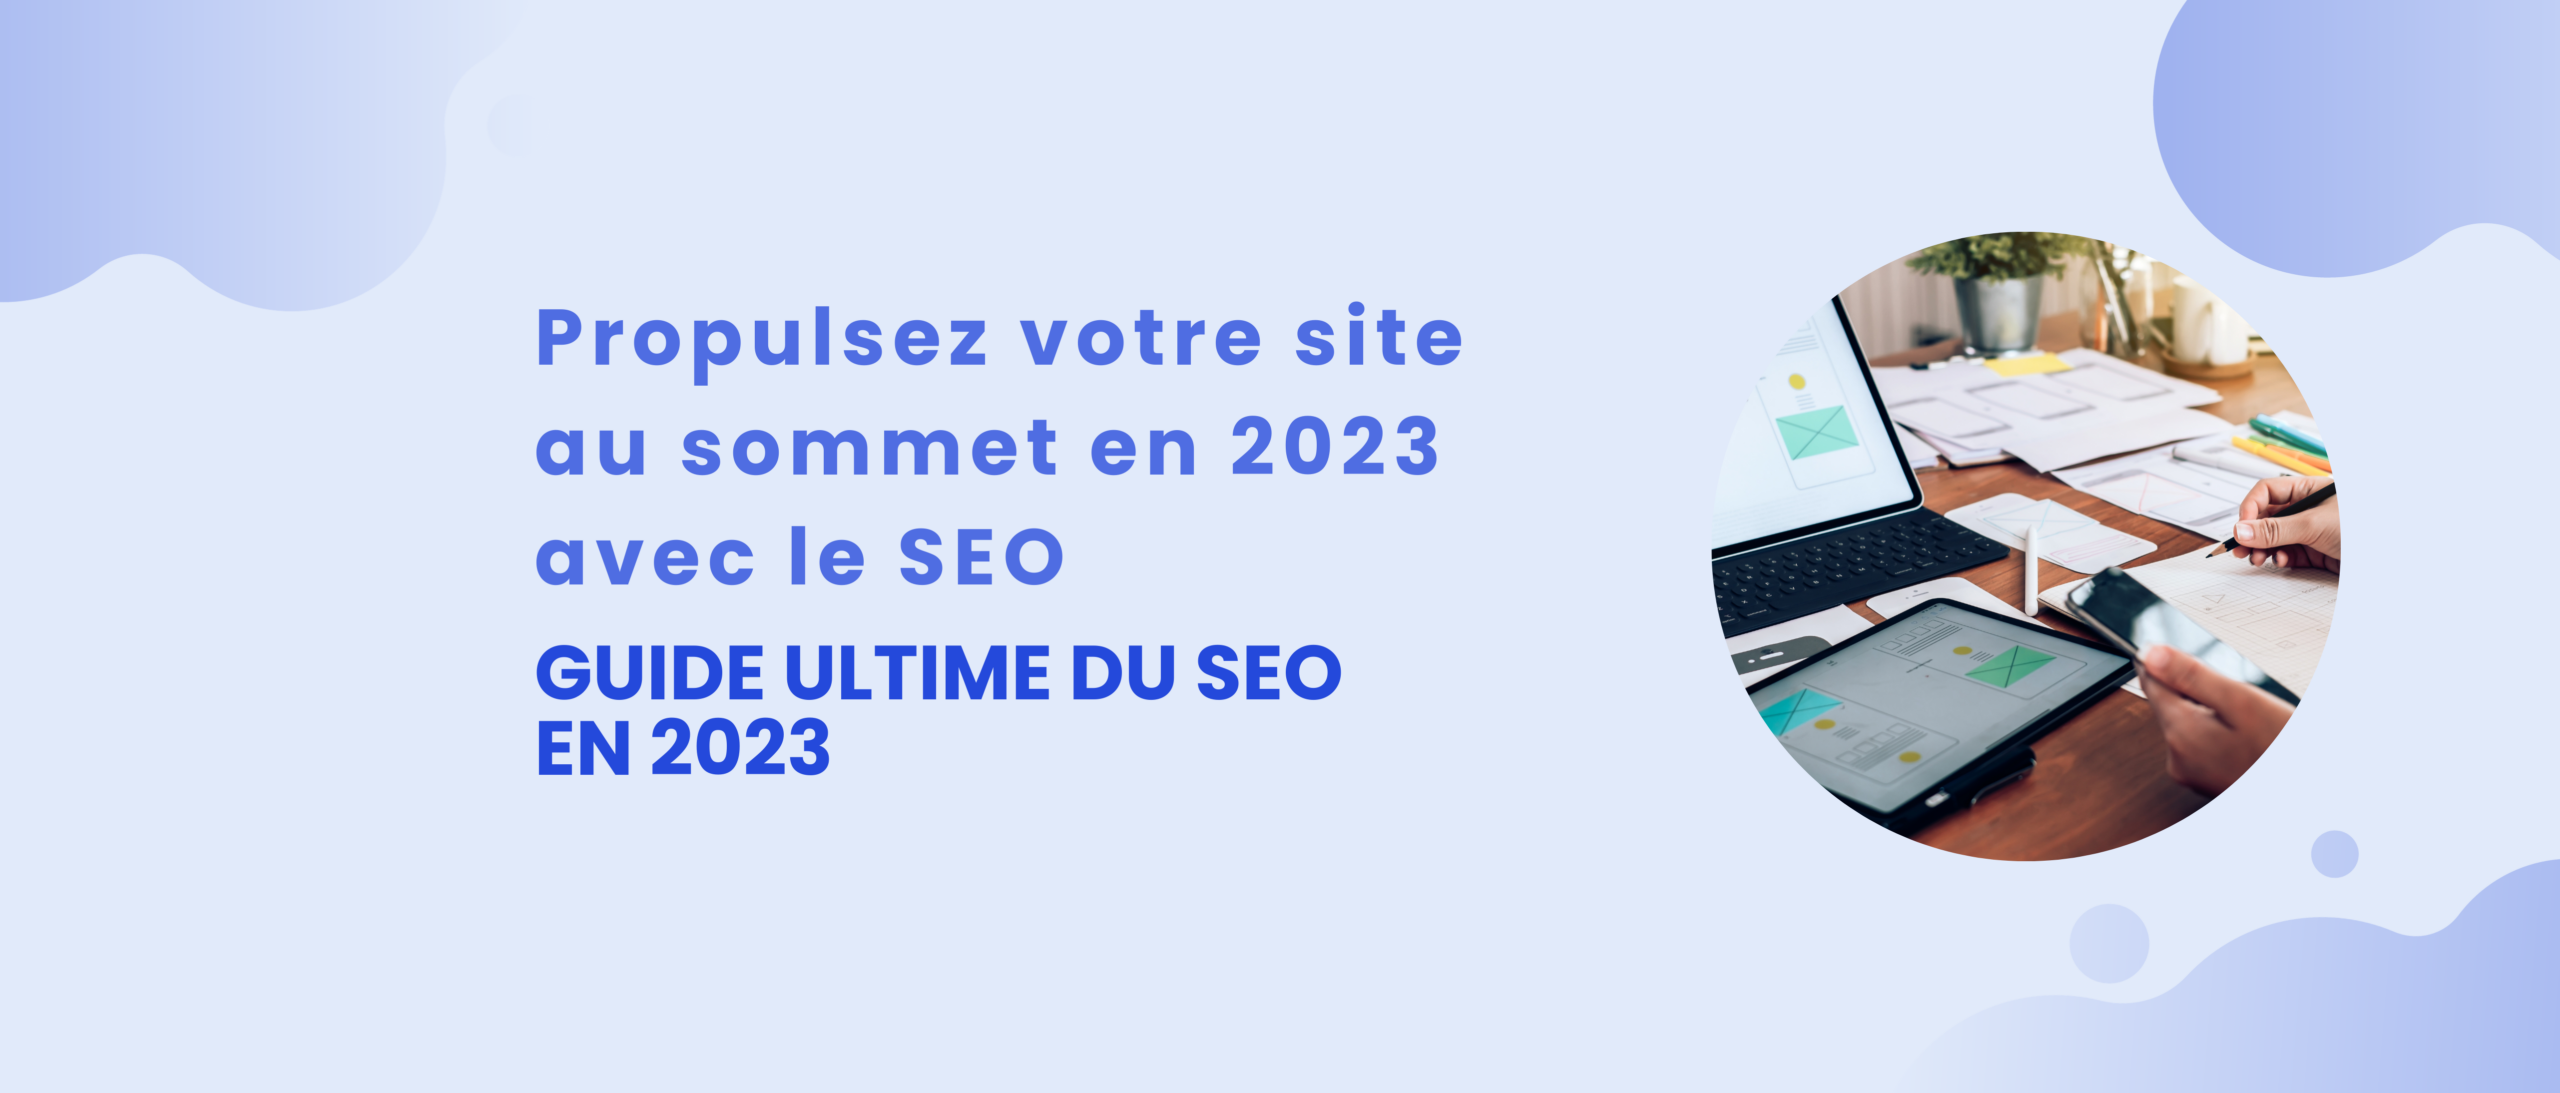 Guide Ultime du SEO (Search Engine Optimization) en 2023